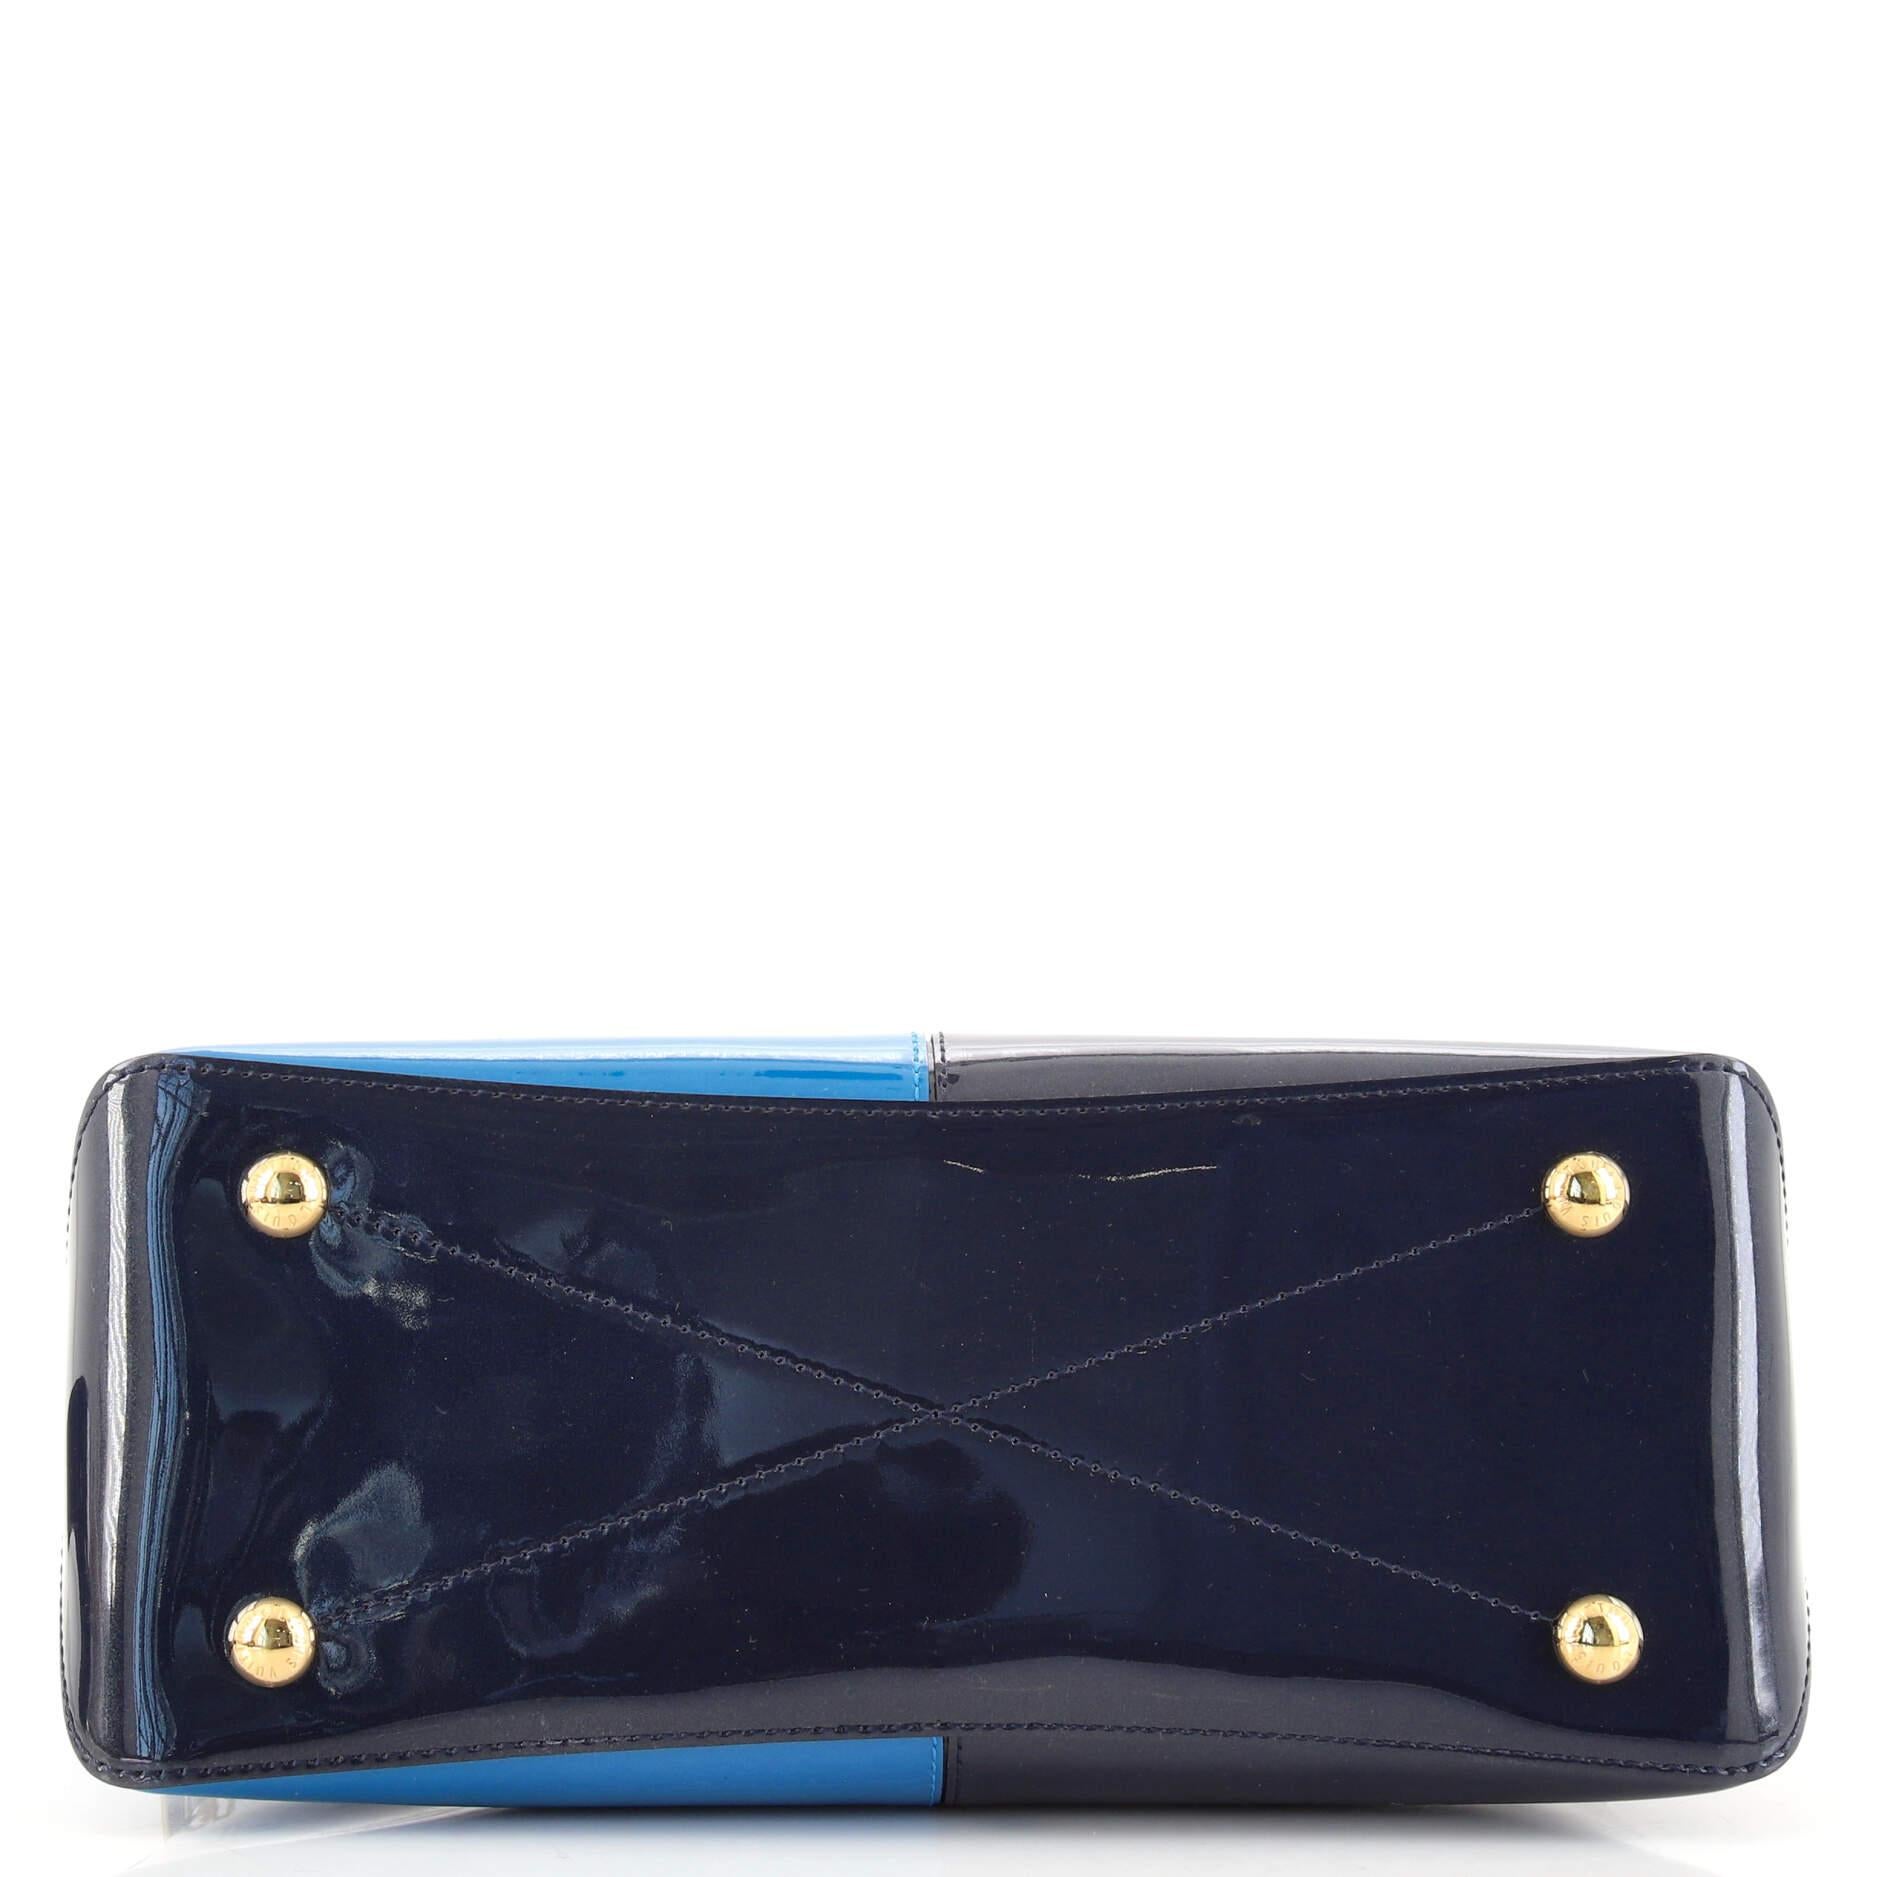 Blue Louis Vuitton Miroir Handbag Patent